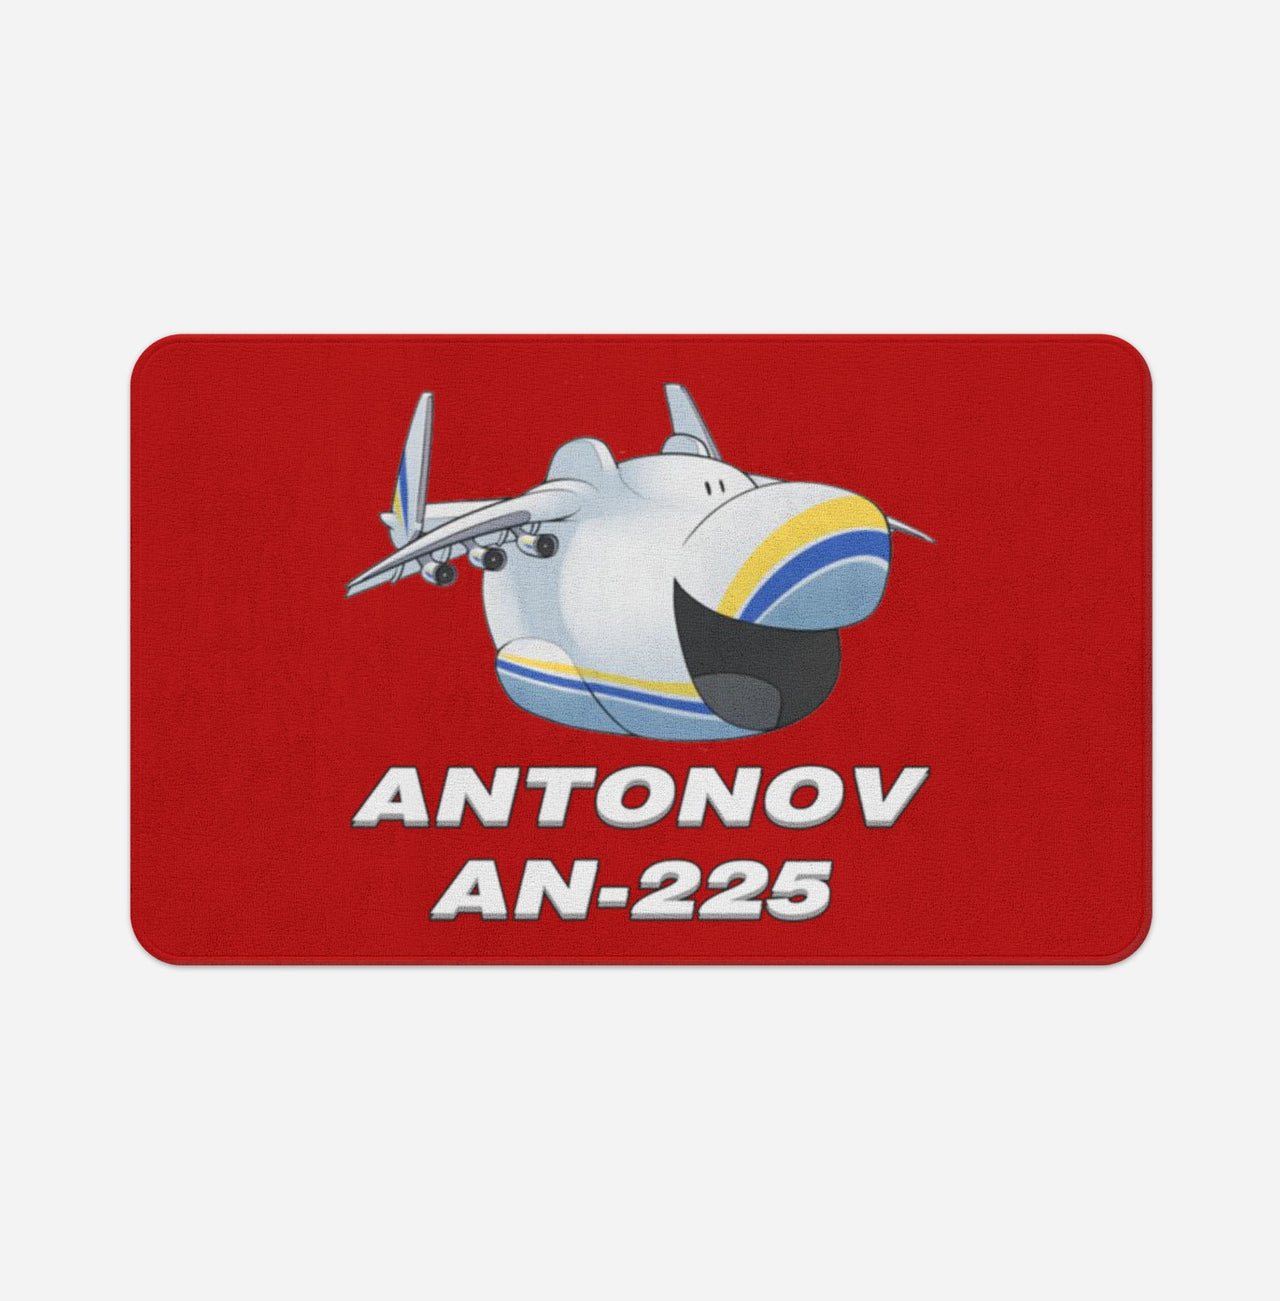 Antonov AN-225 (23) Designed Bath Mats